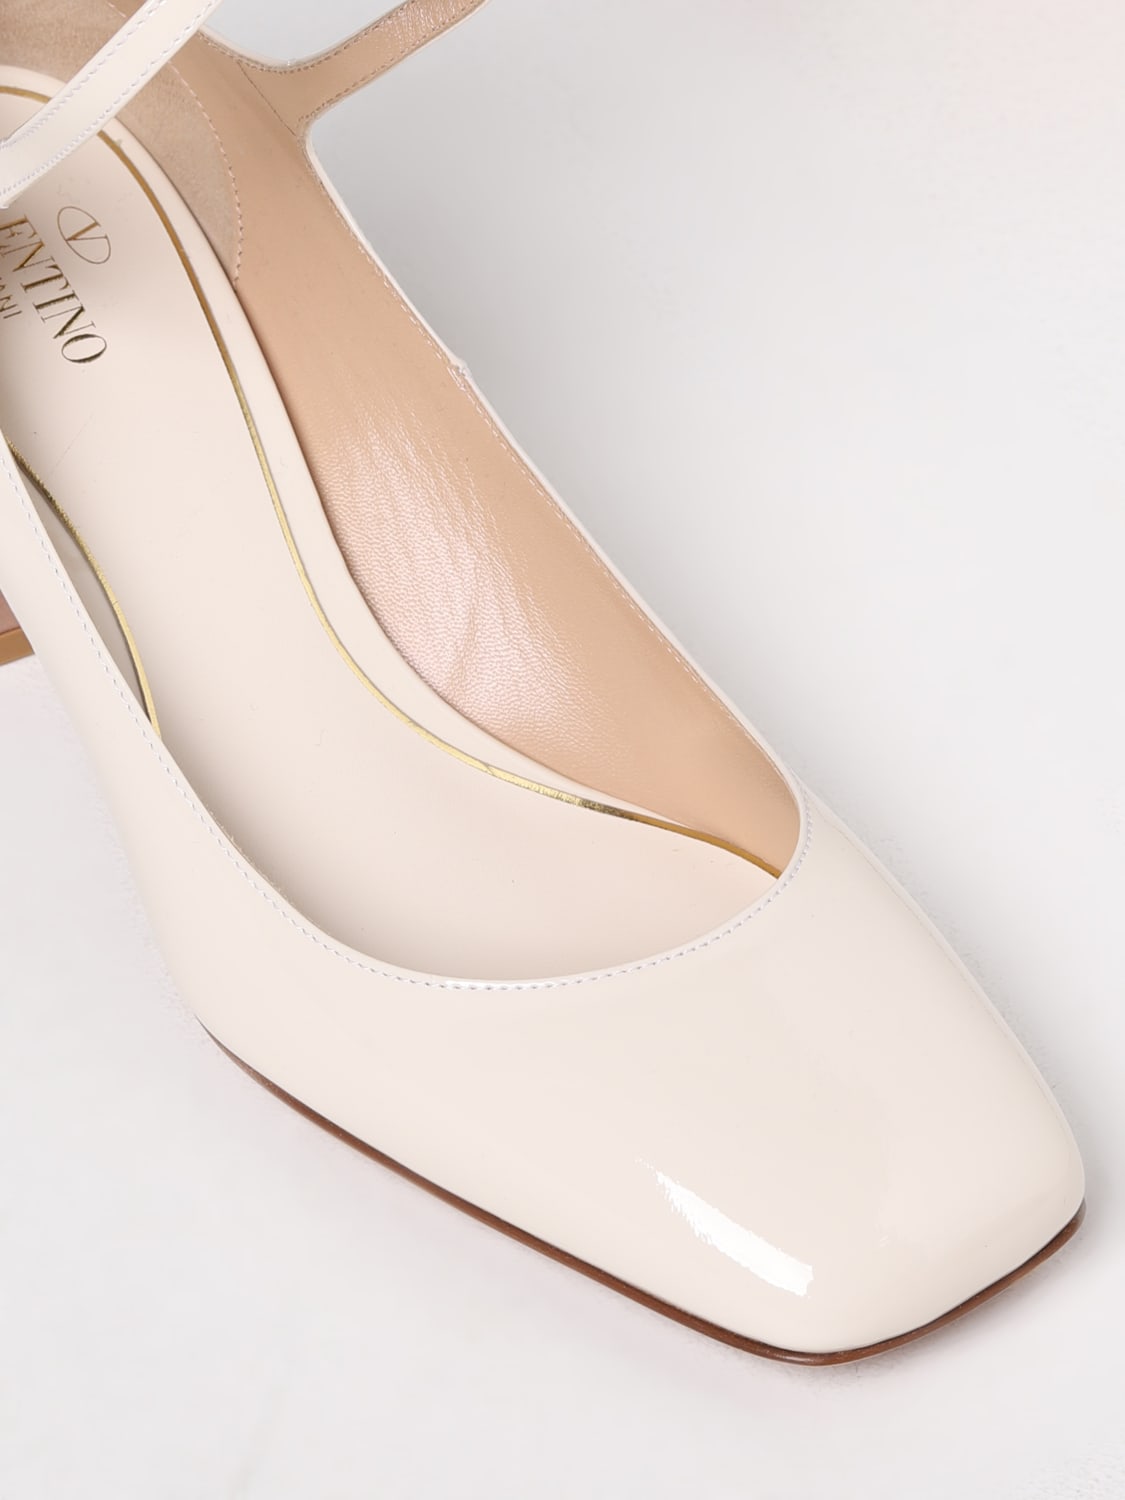 VALENTINO GARAVANI: high heel shoes for women Ivory | Valentino Garavani high heel shoes 2W2S0FW5VNE online on GIGLIO.COM